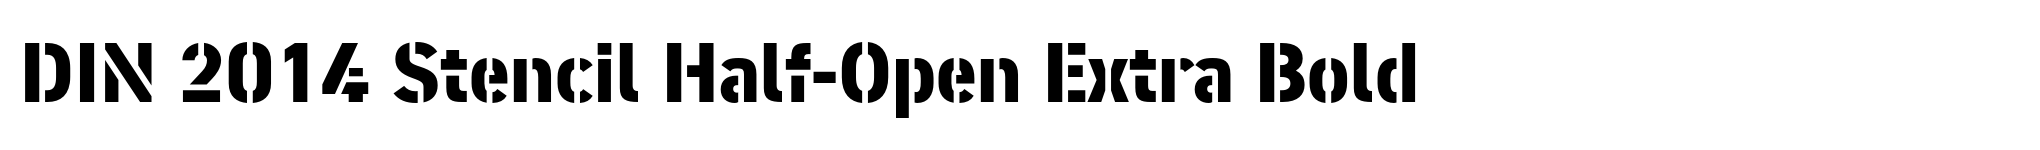 DIN 2014 Stencil Half-Open Extra Bold image